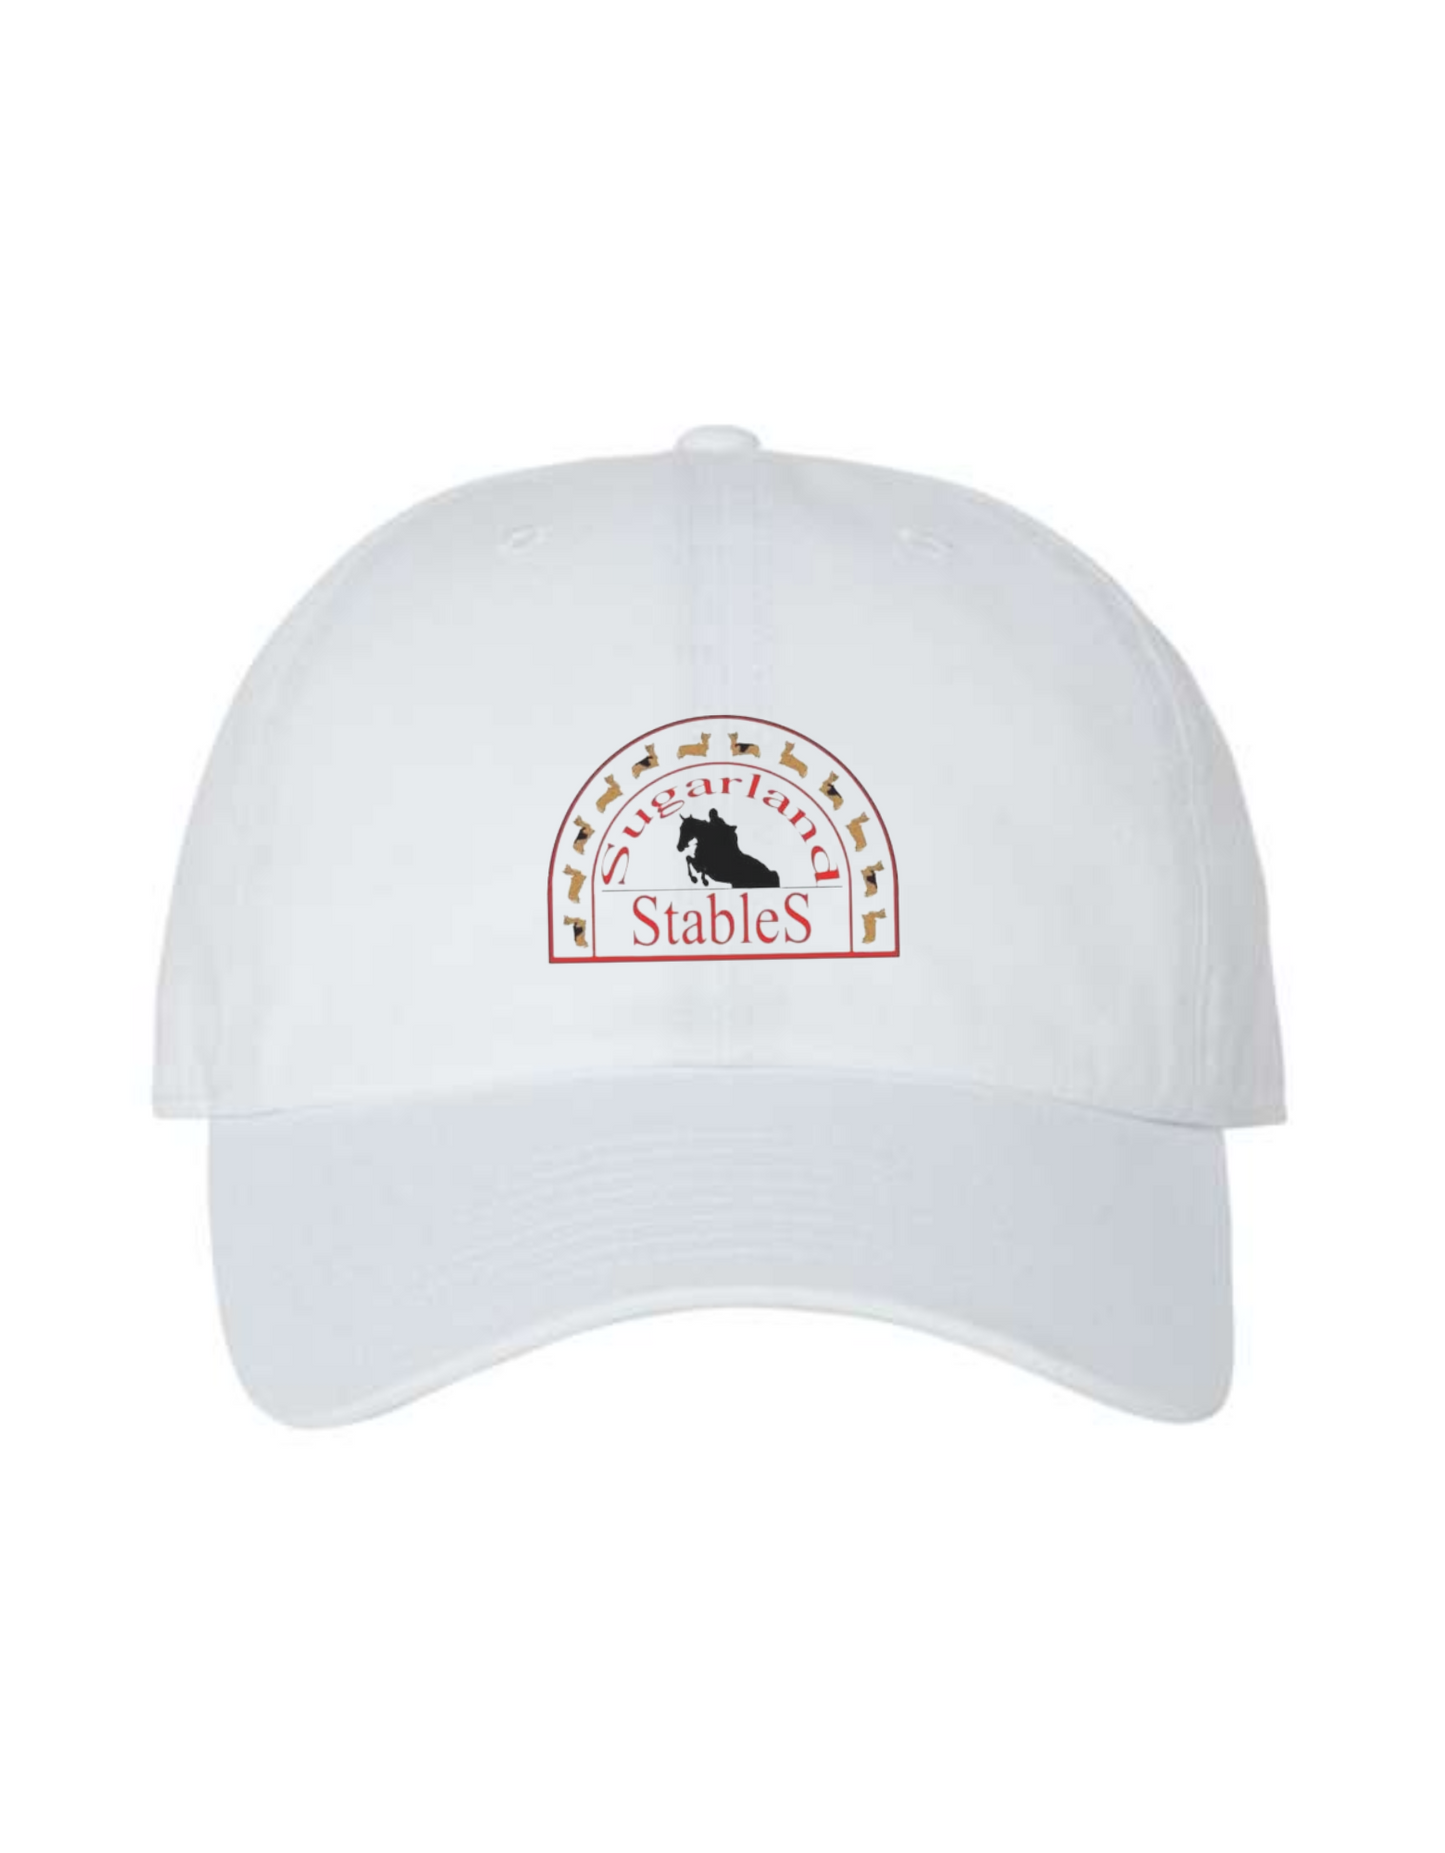 Sugarland Stables - 47' Adjustable Hat